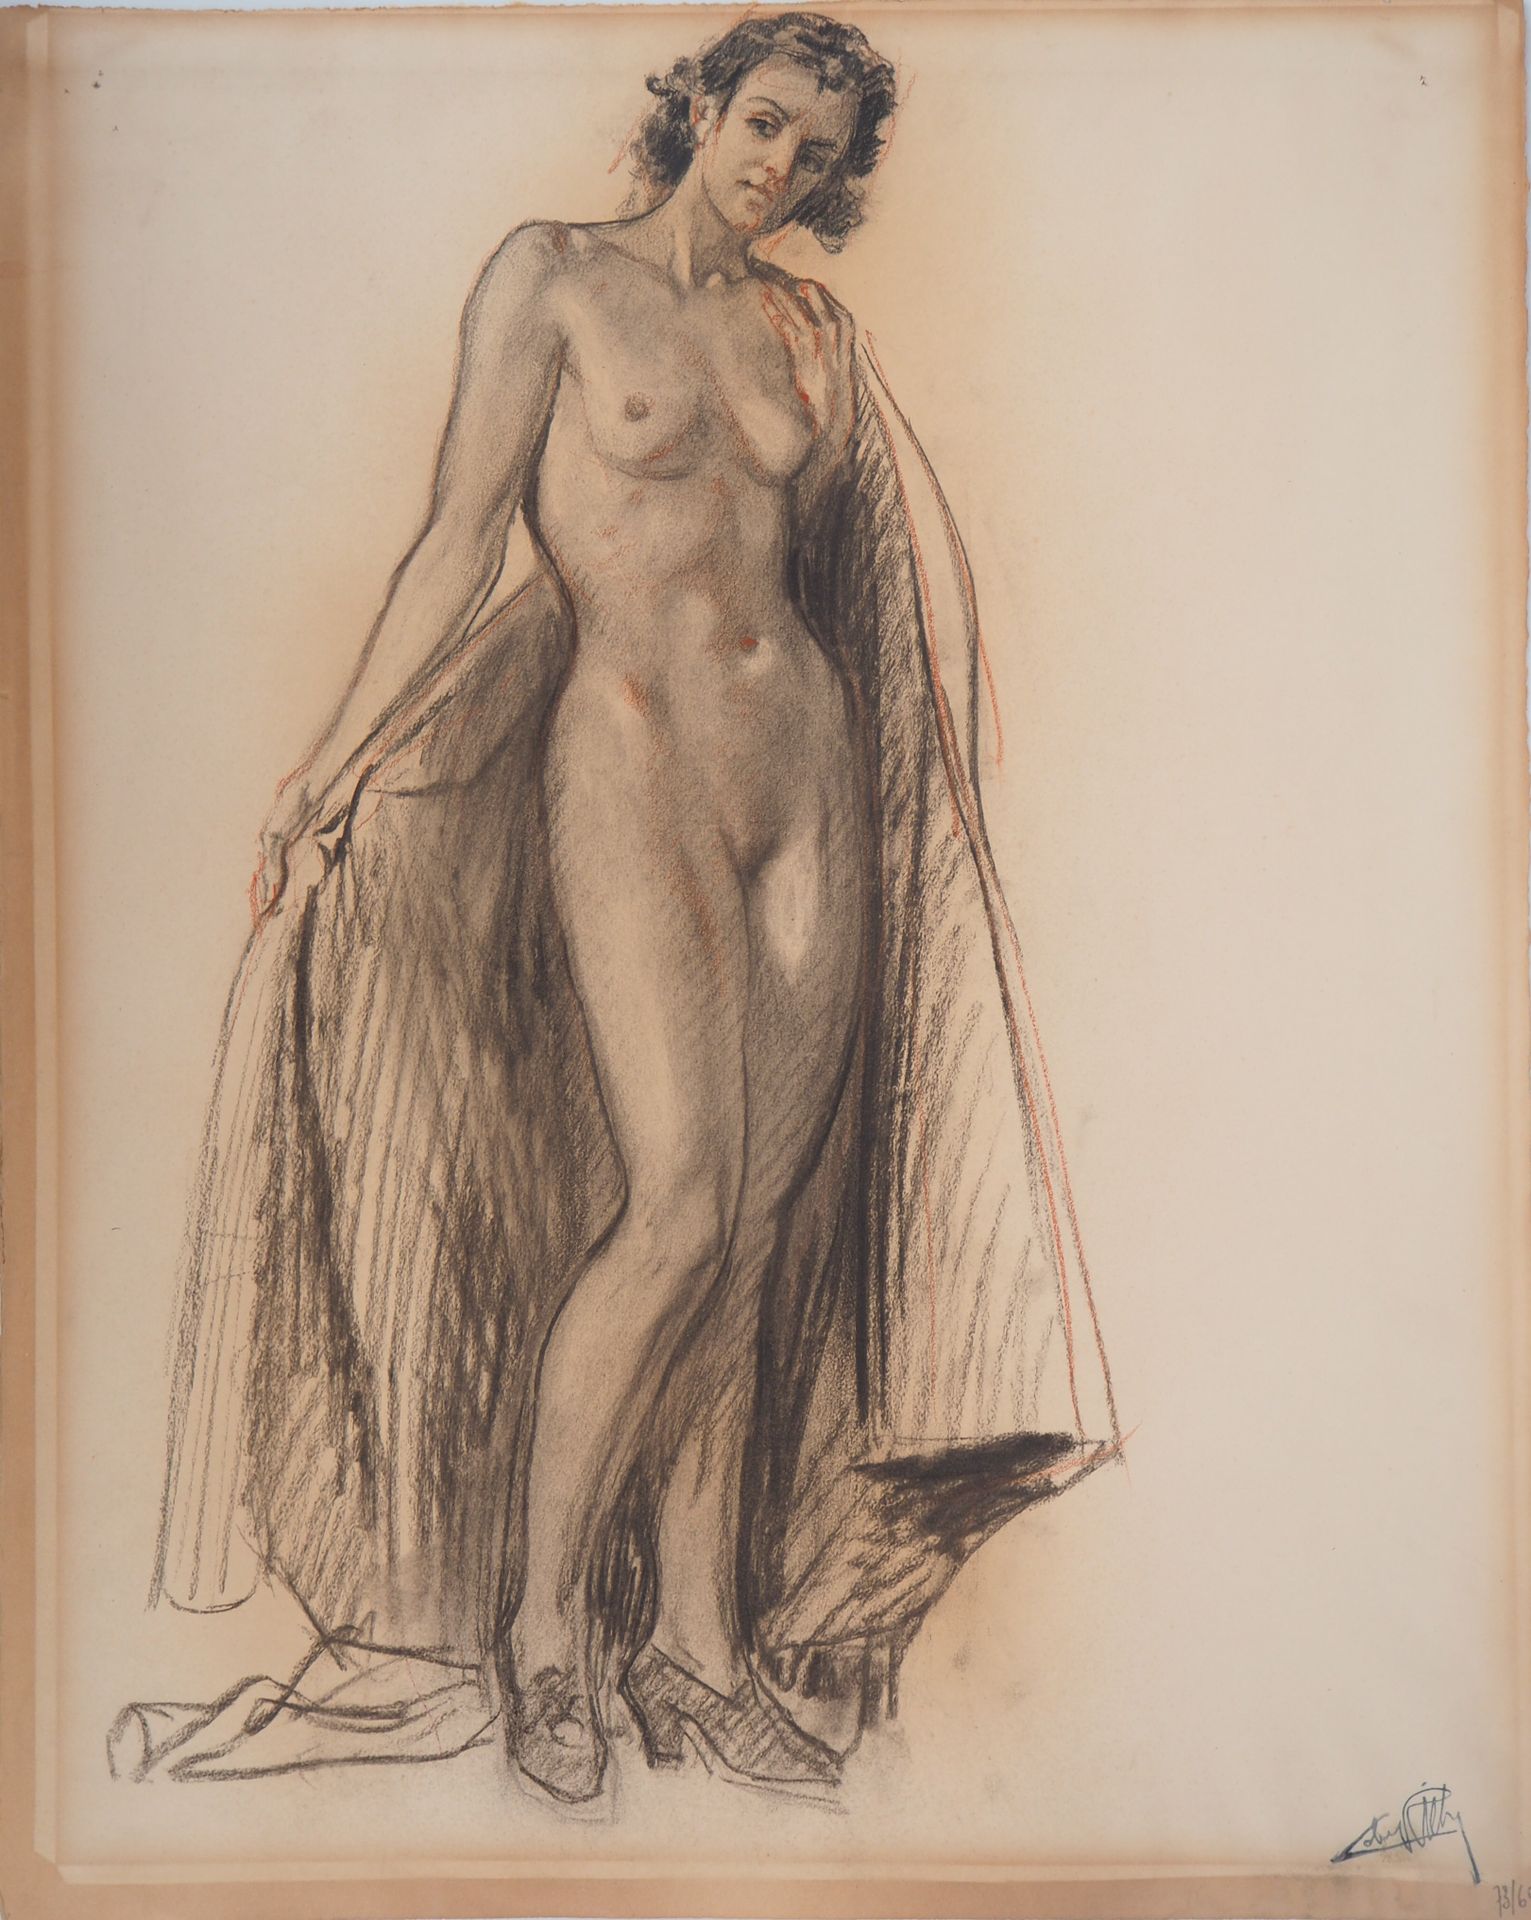 Almery LOBEL-RICHE Alméry LOBEL-RICHE (1880-1950)

Modèle s'habillant, c. 1920

&hellip;